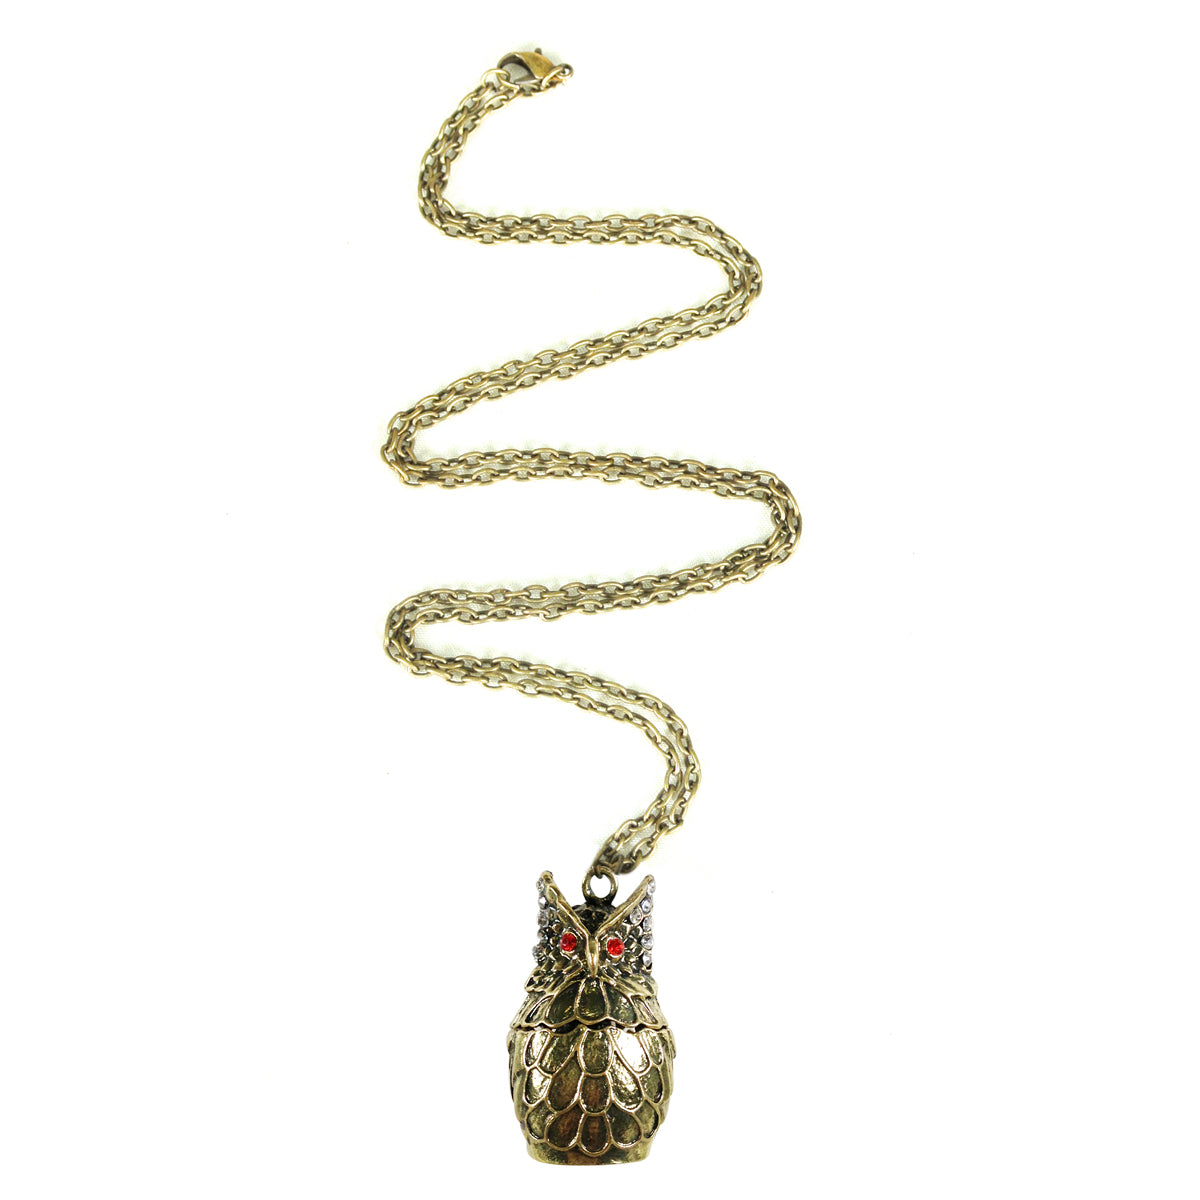 Vintage Owl Locket Pendant Necklace